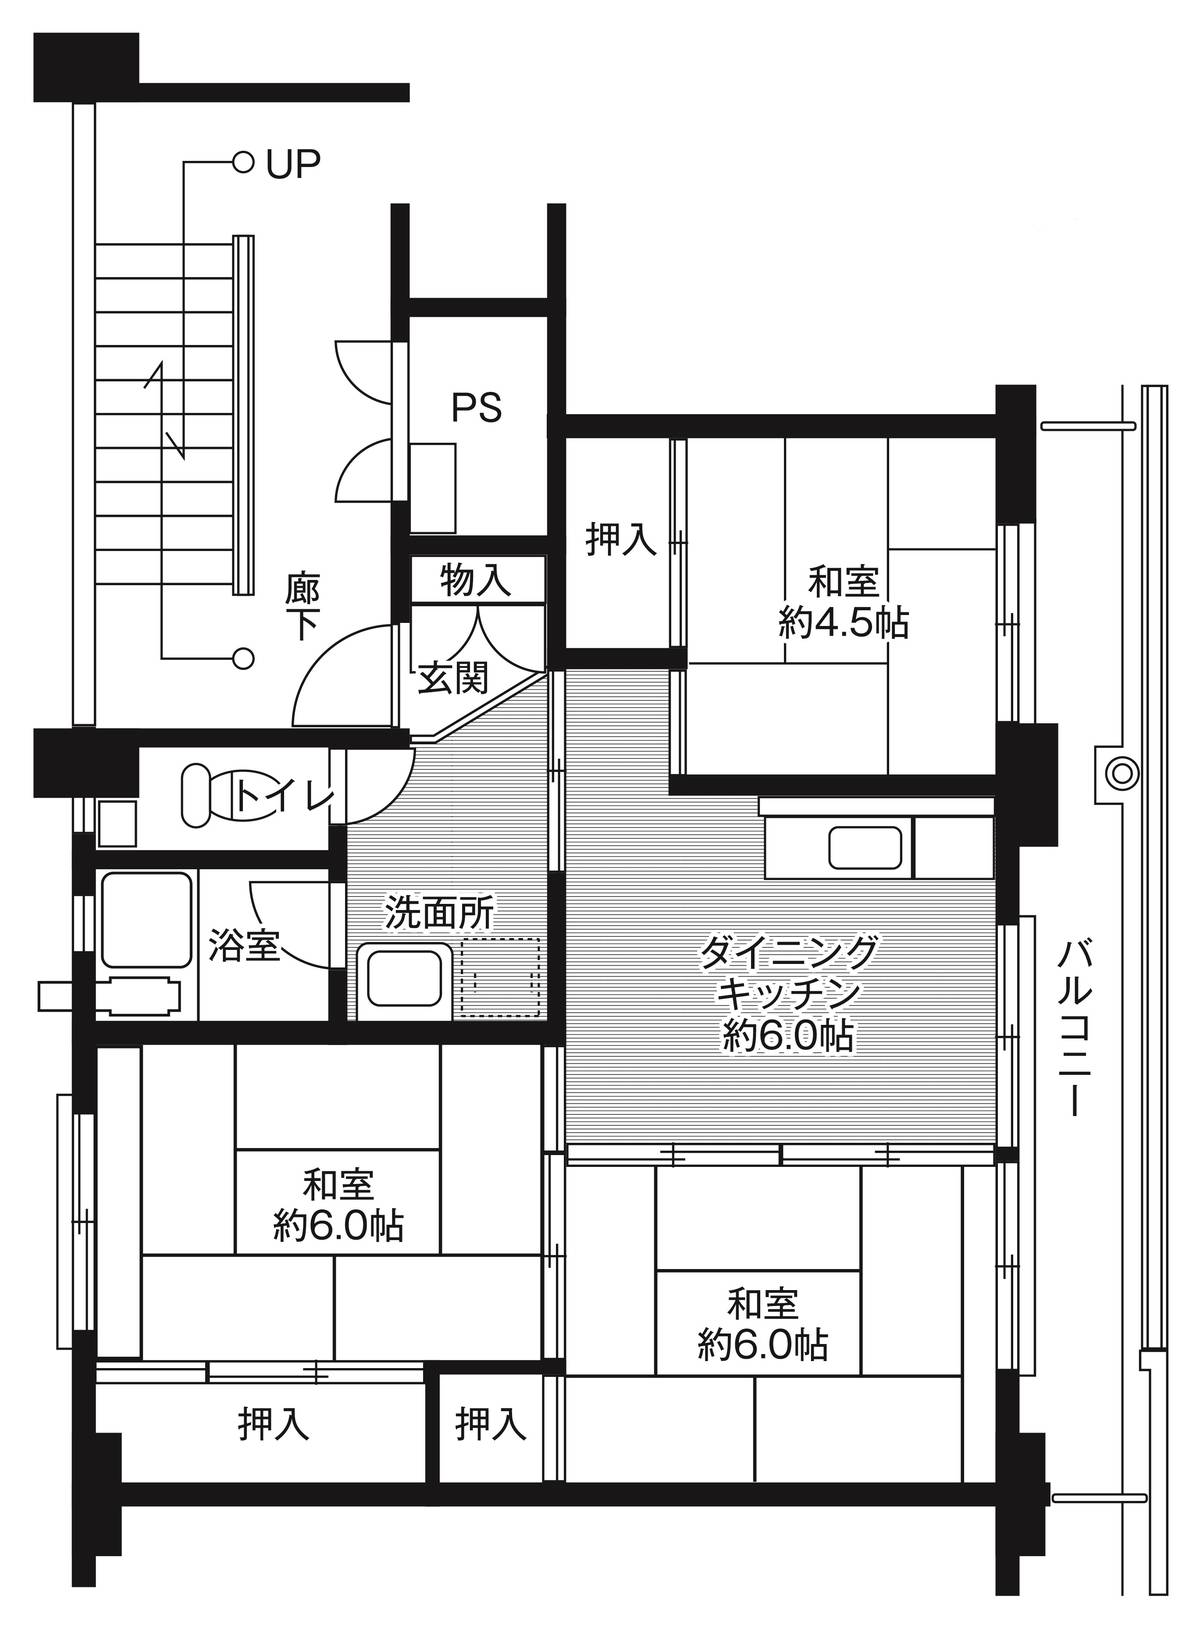 3DK floorplan of Village House Yabara in Yamaguchi-shi